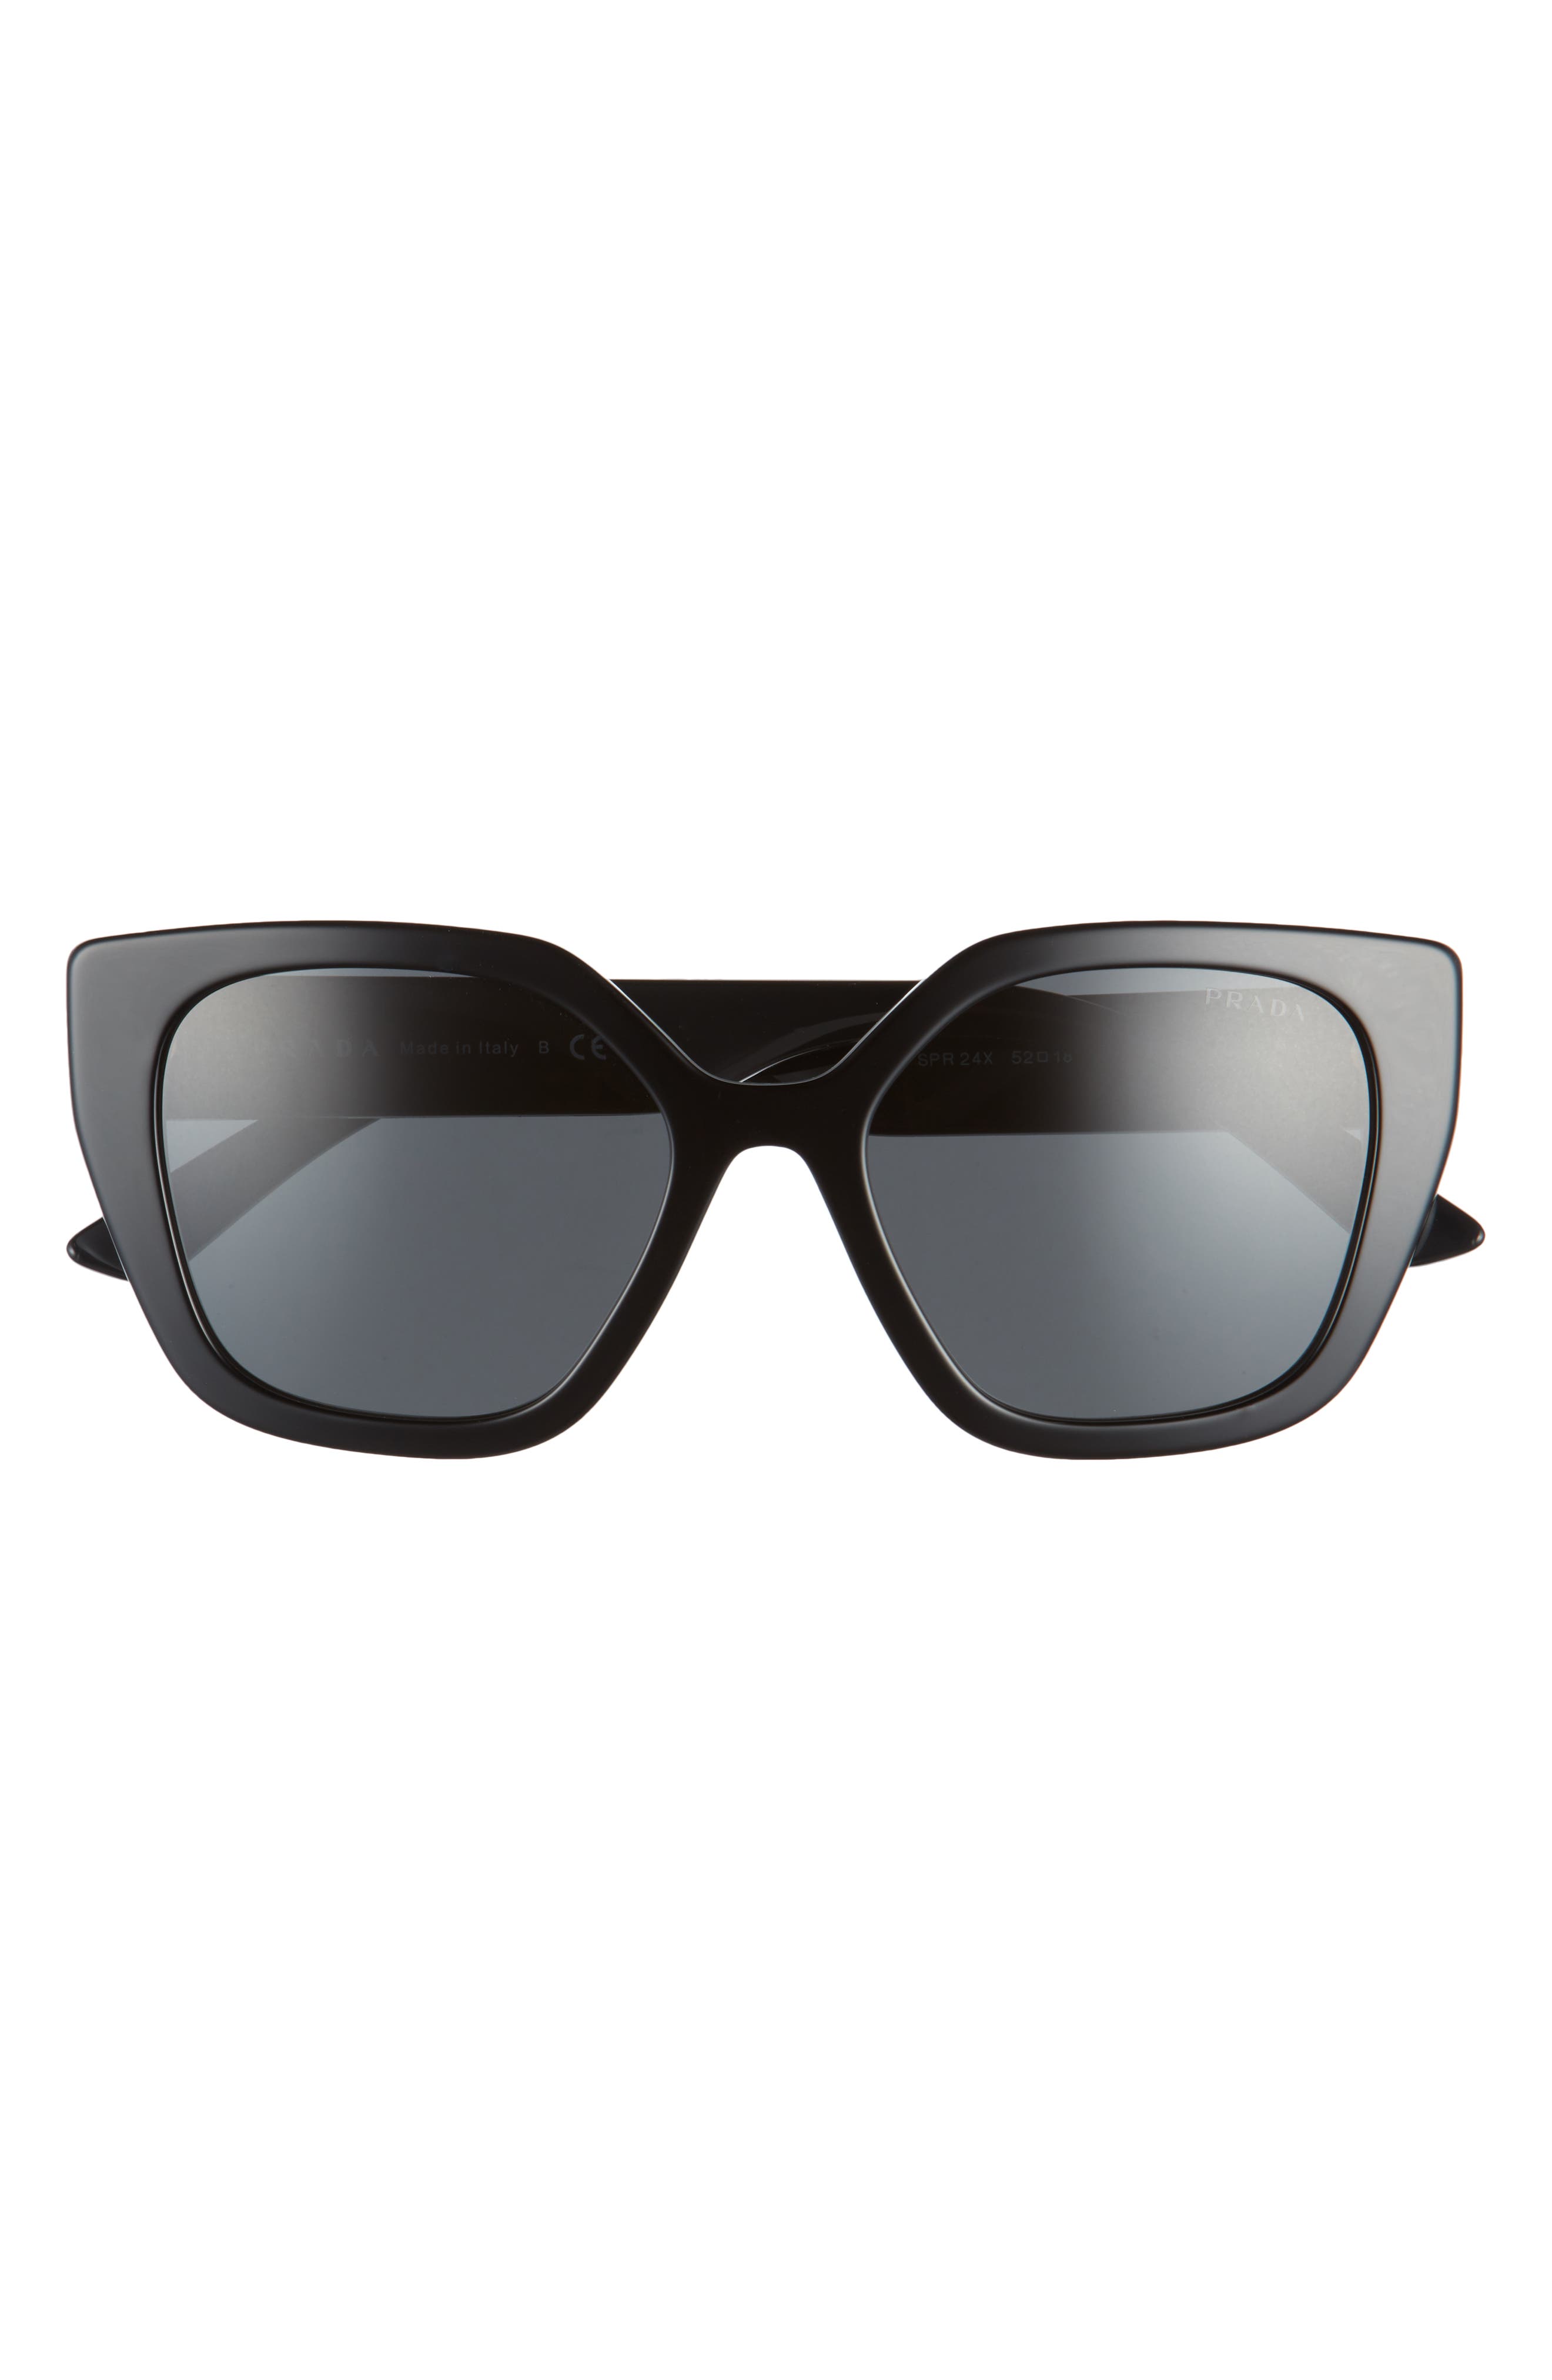 elite sunglasses prada price